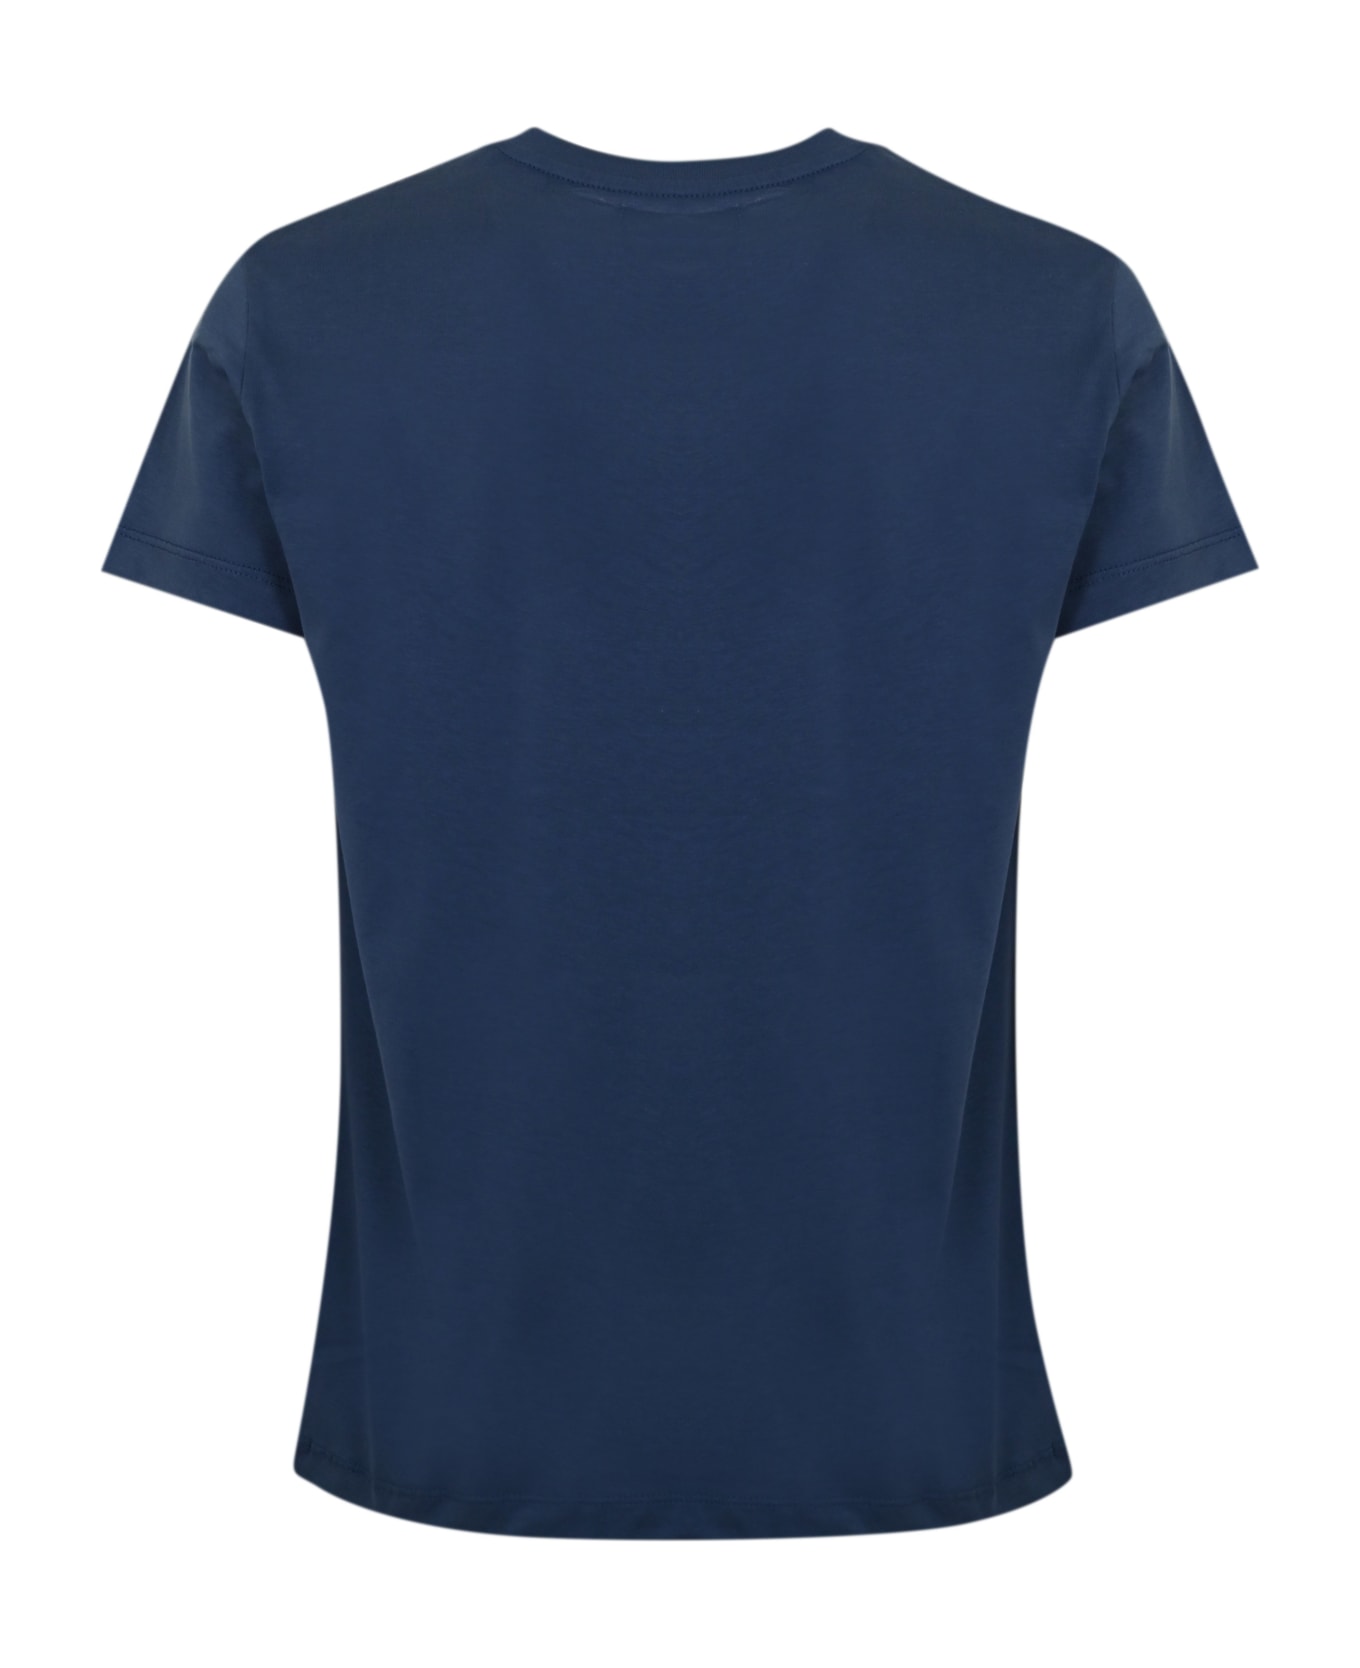 Vilebrequin A Saint Tropez Blue T-shirt - Blu yatch シャツ